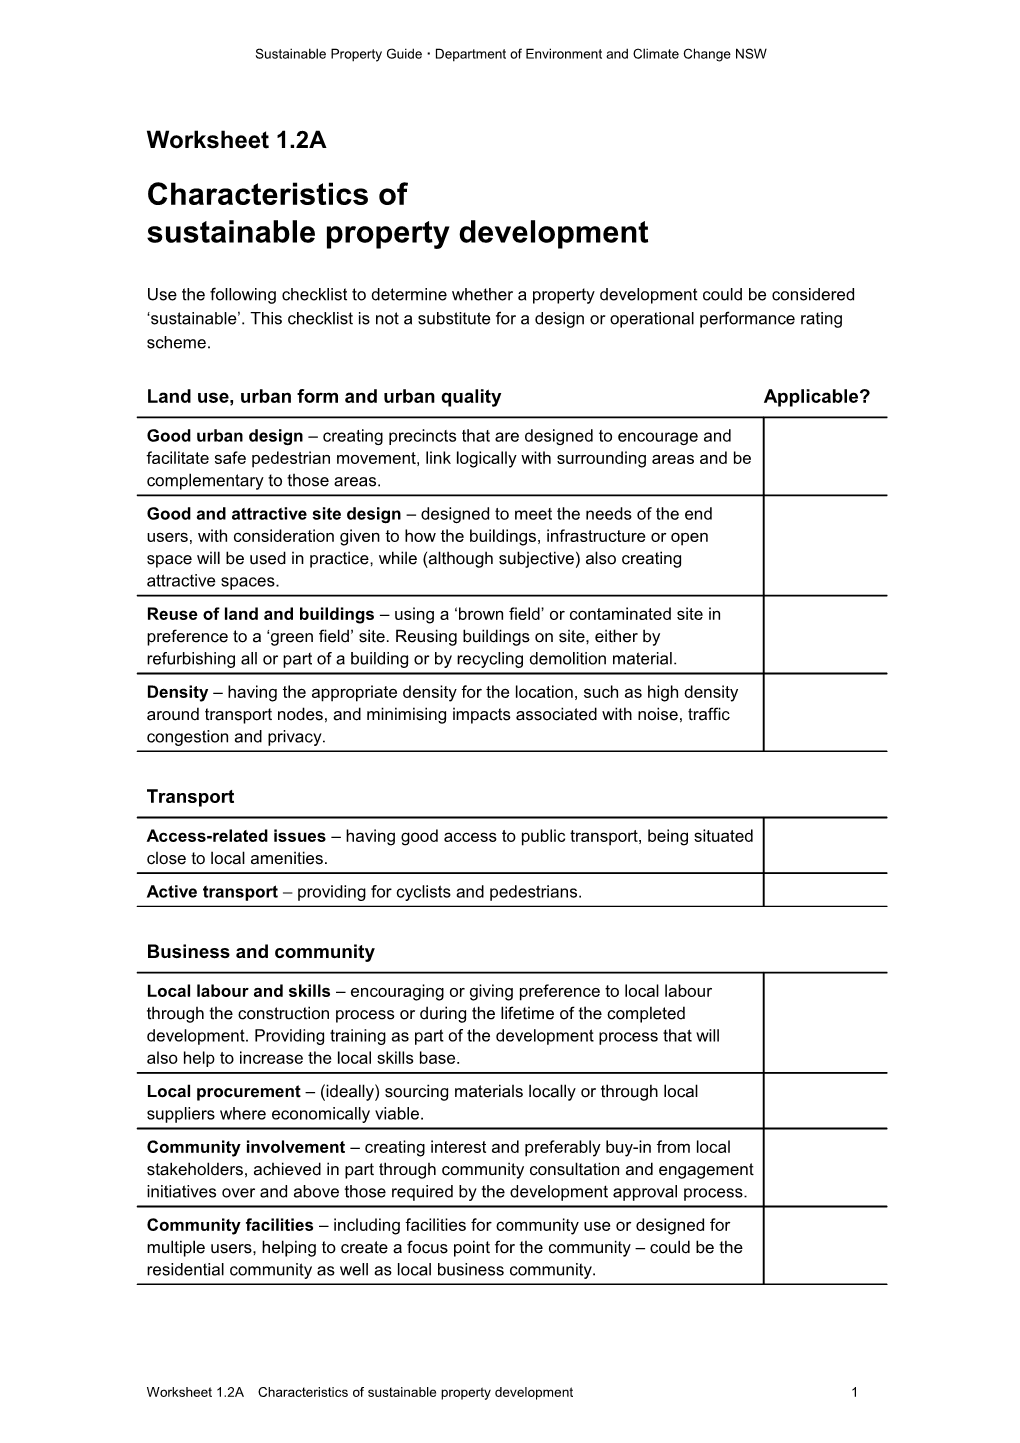 Characteristics of Sustainable Property Development